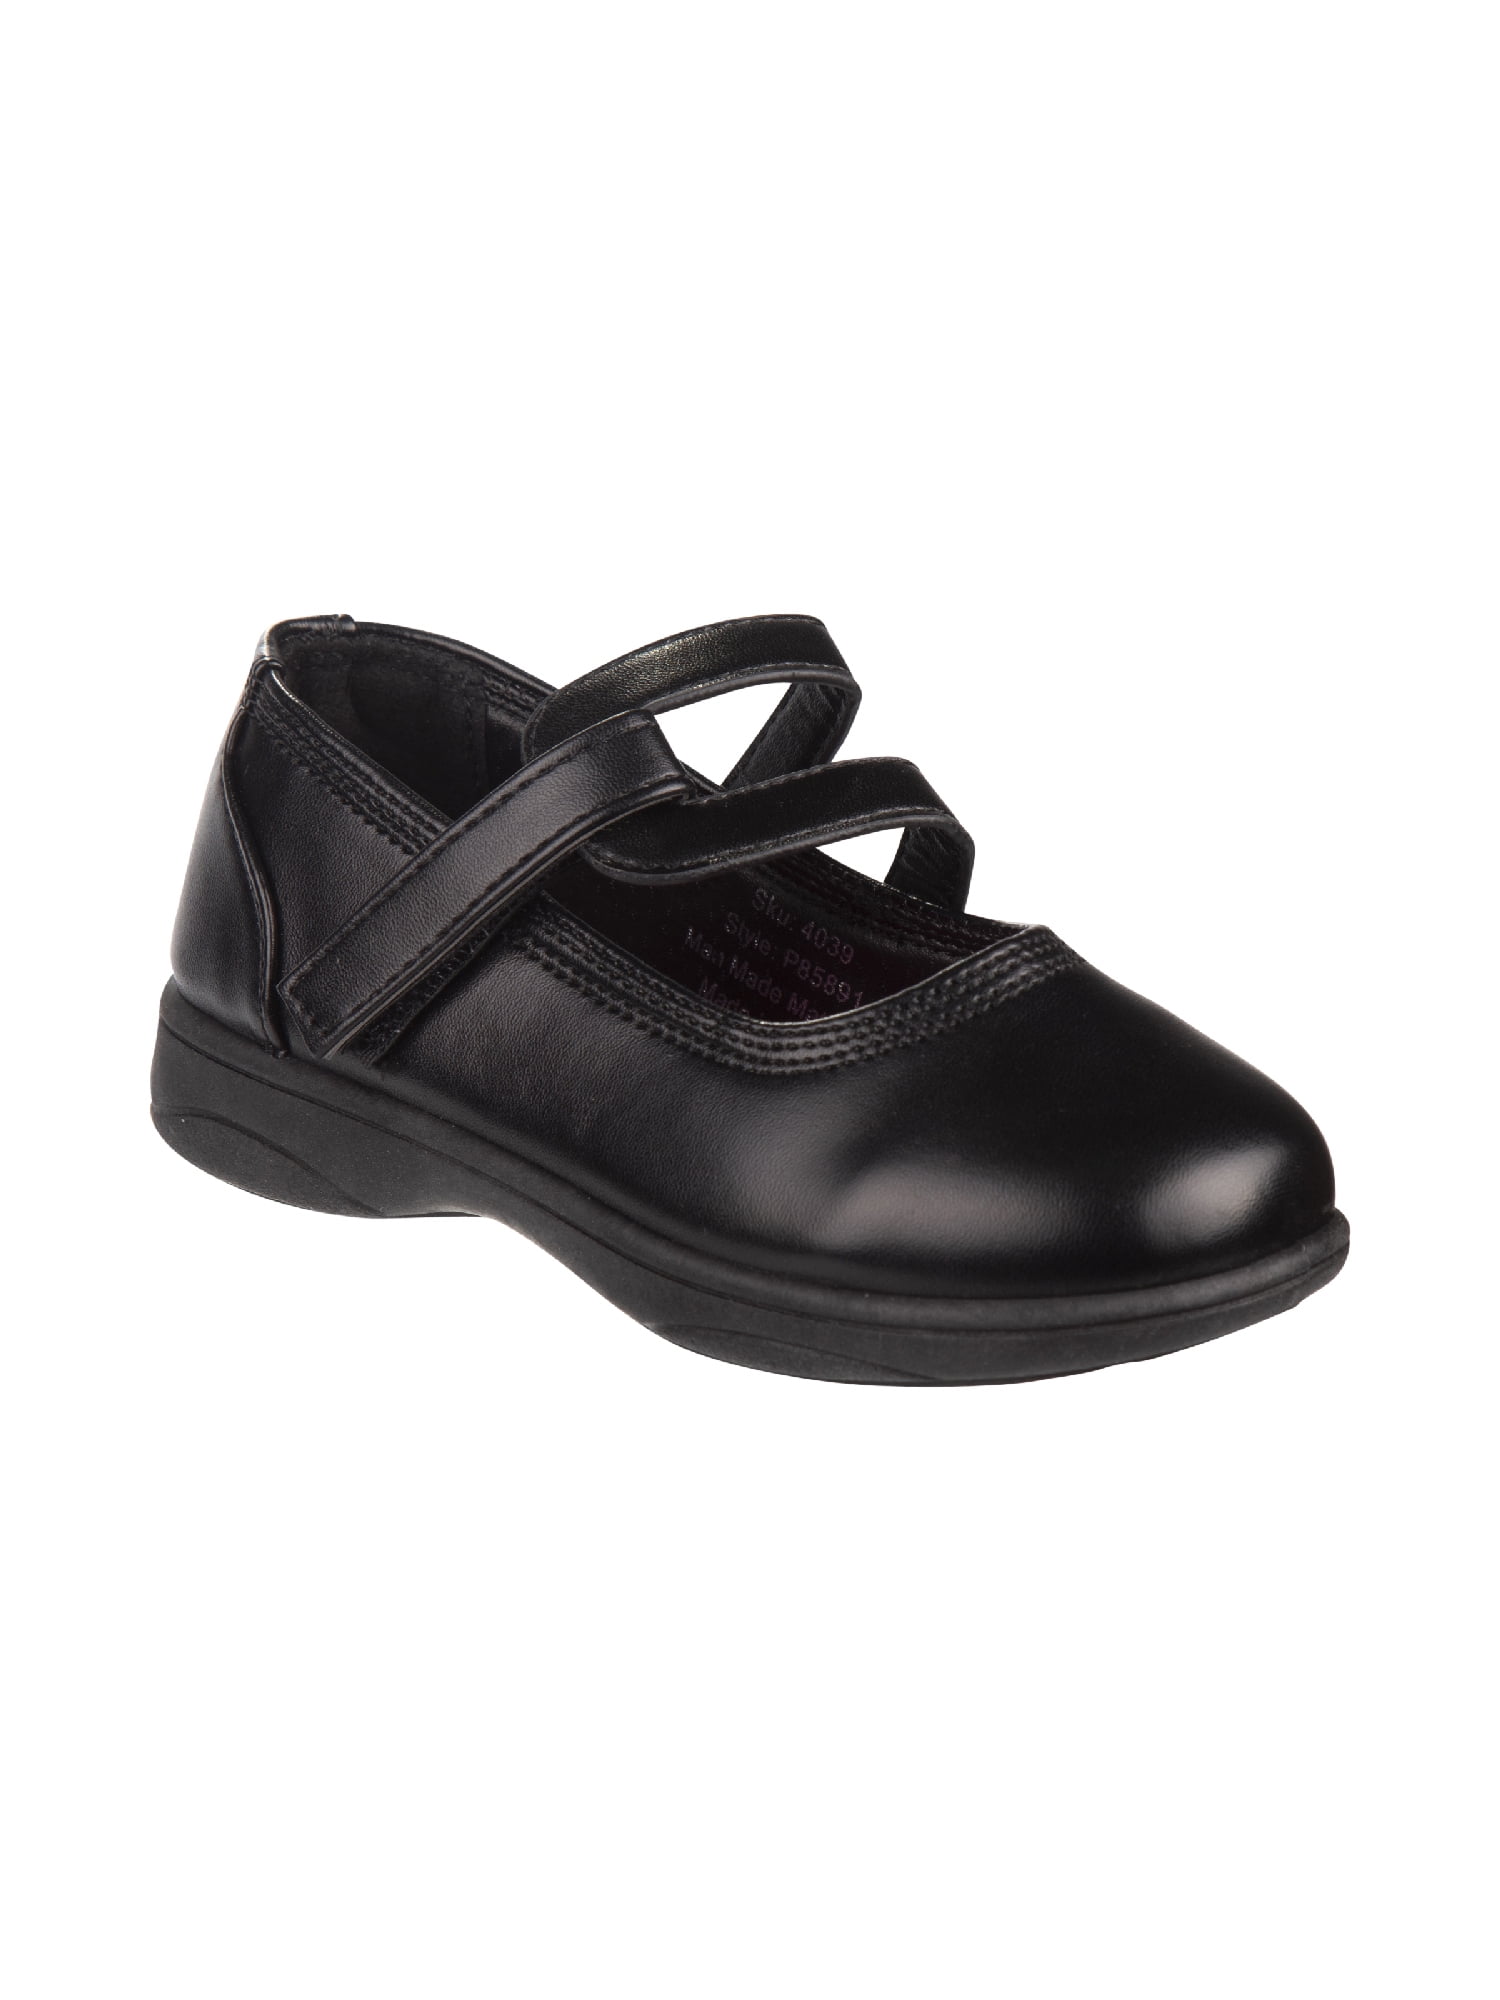 Size 10 M US Toddler Petalia Girls Mary Jane School Uniform Shoes Black Heart 